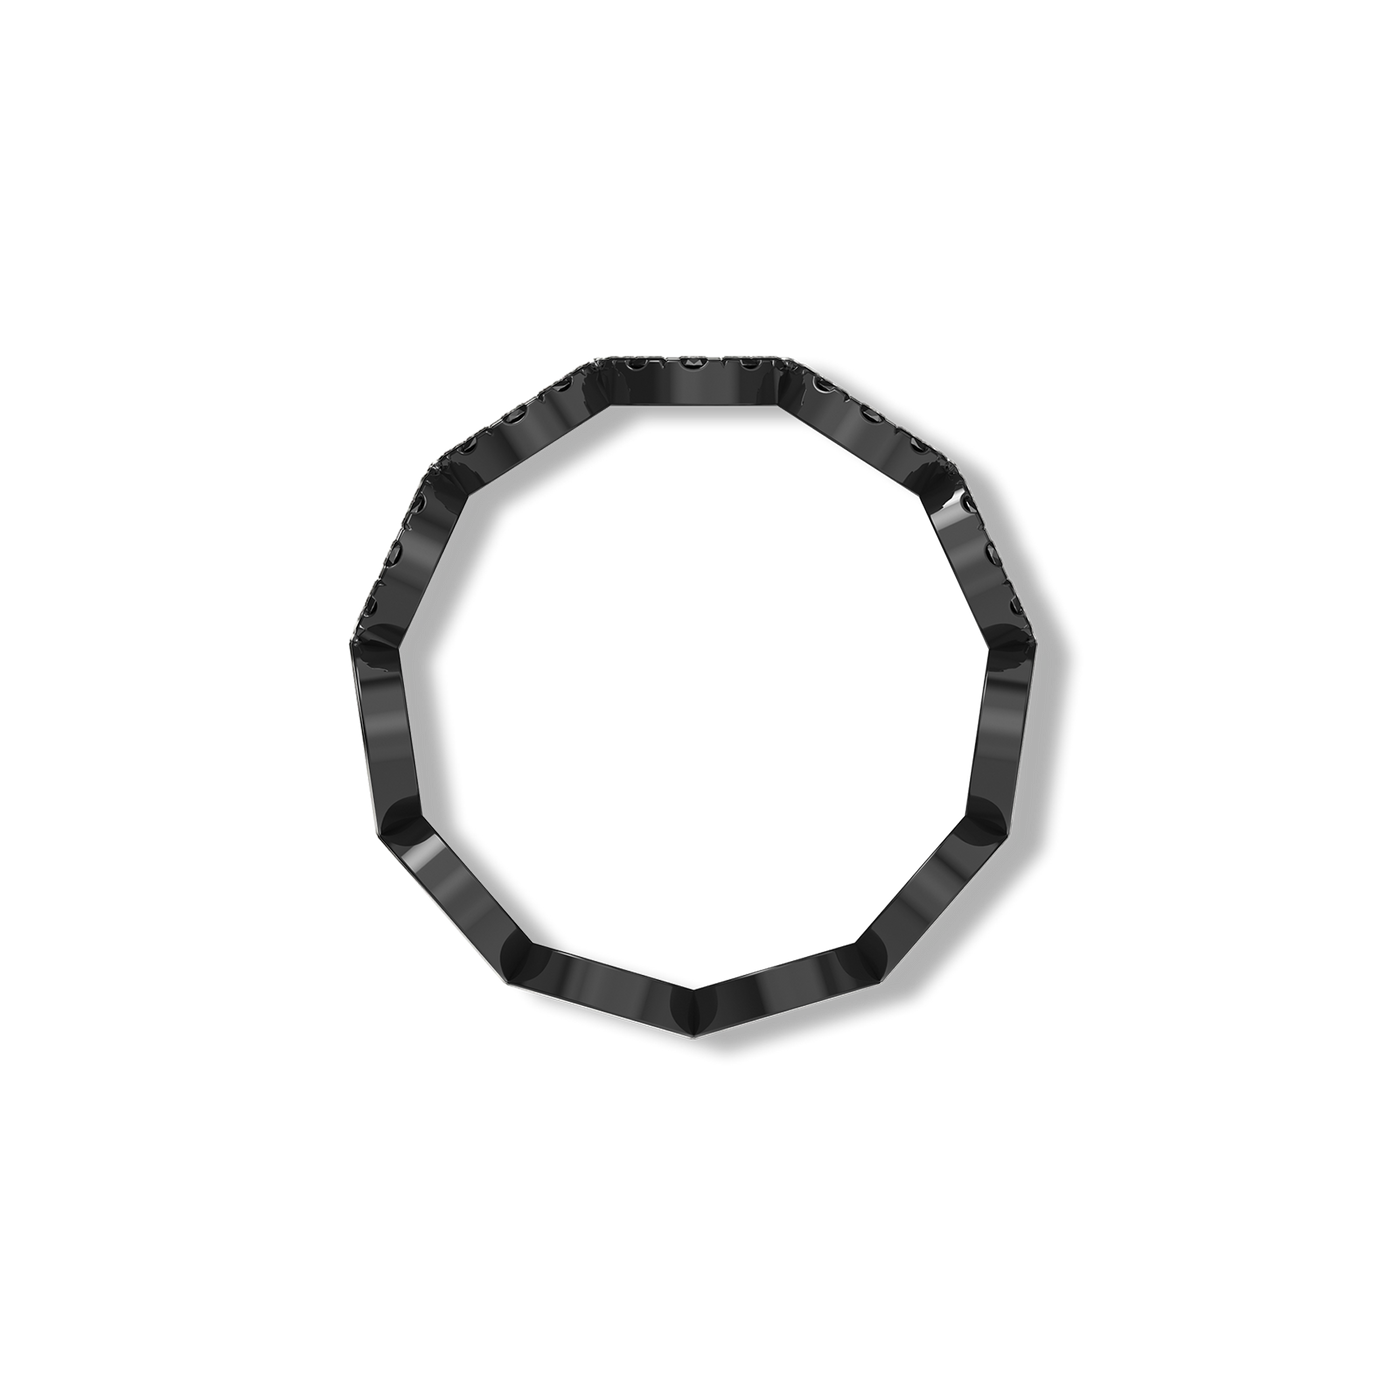 Centric Circular Black Diamond Ring